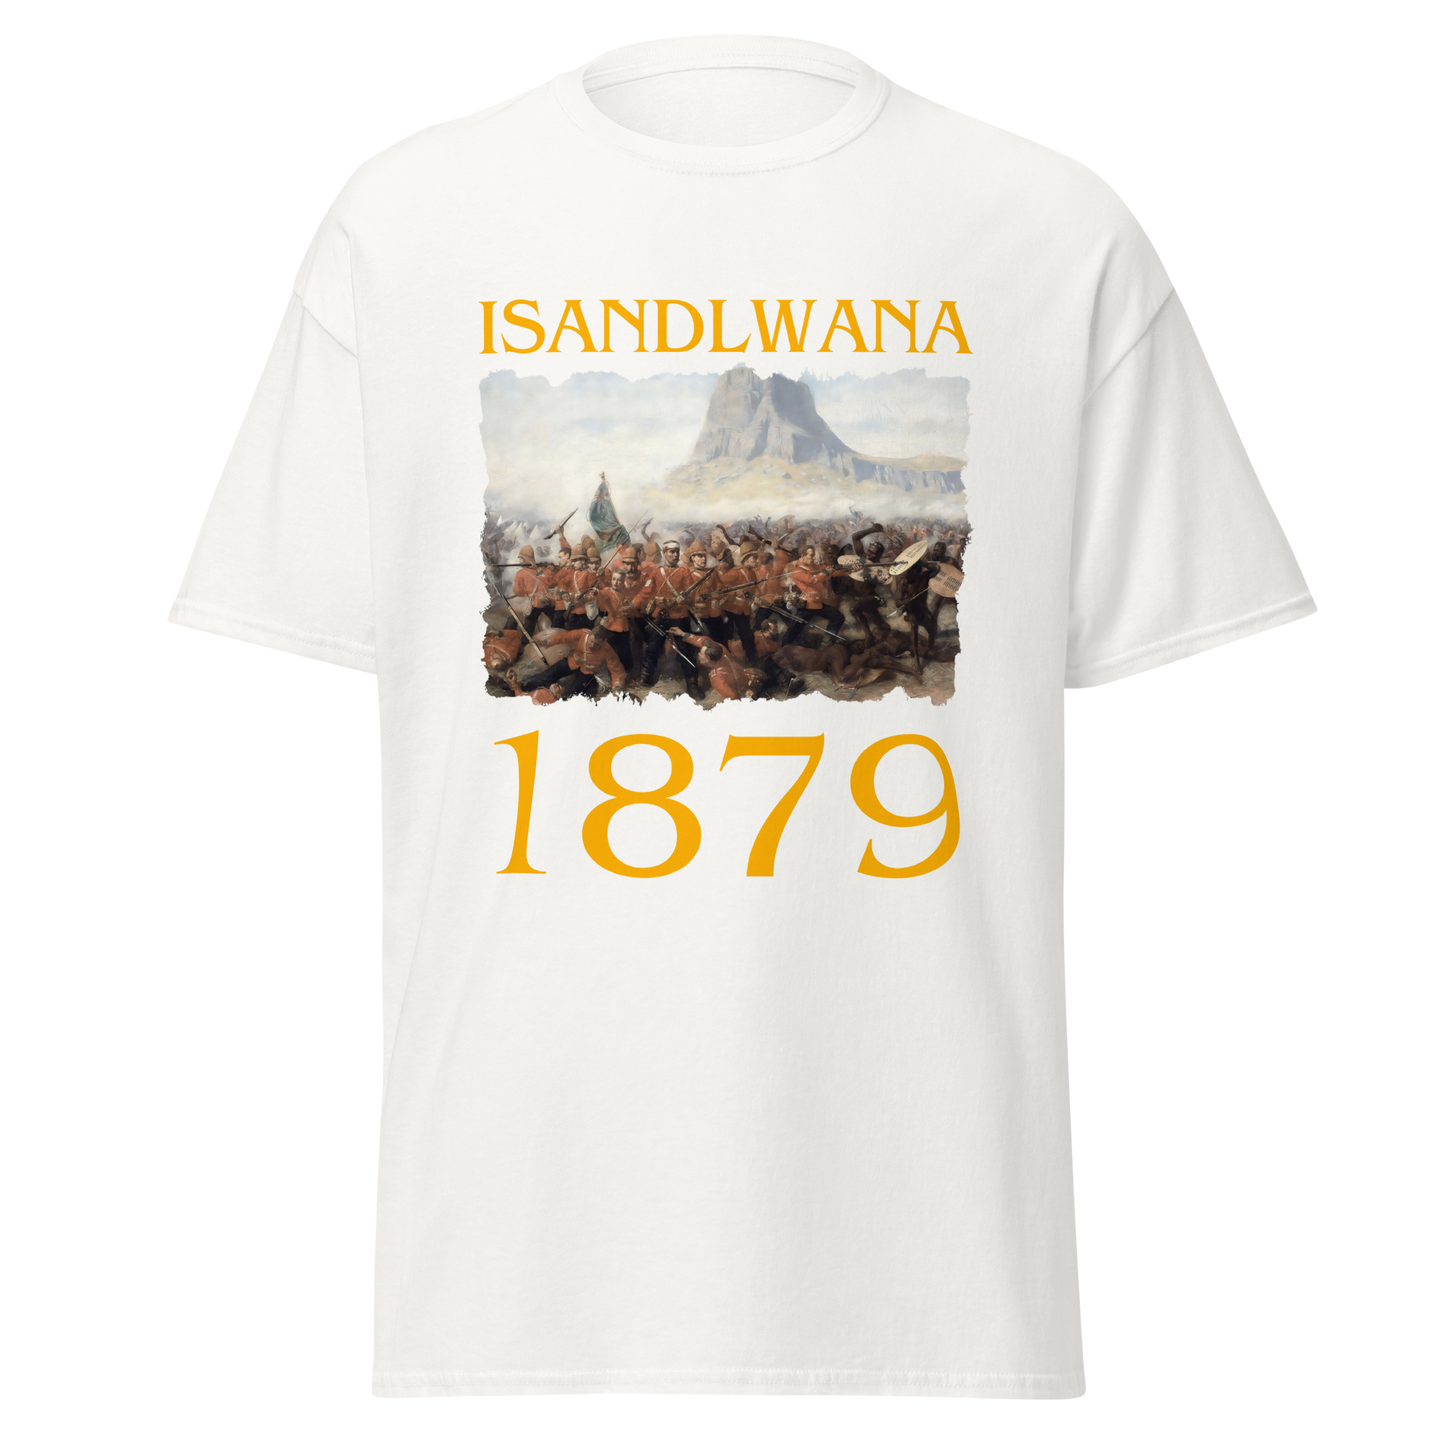 Isandlwana 1879 (t-shirt)